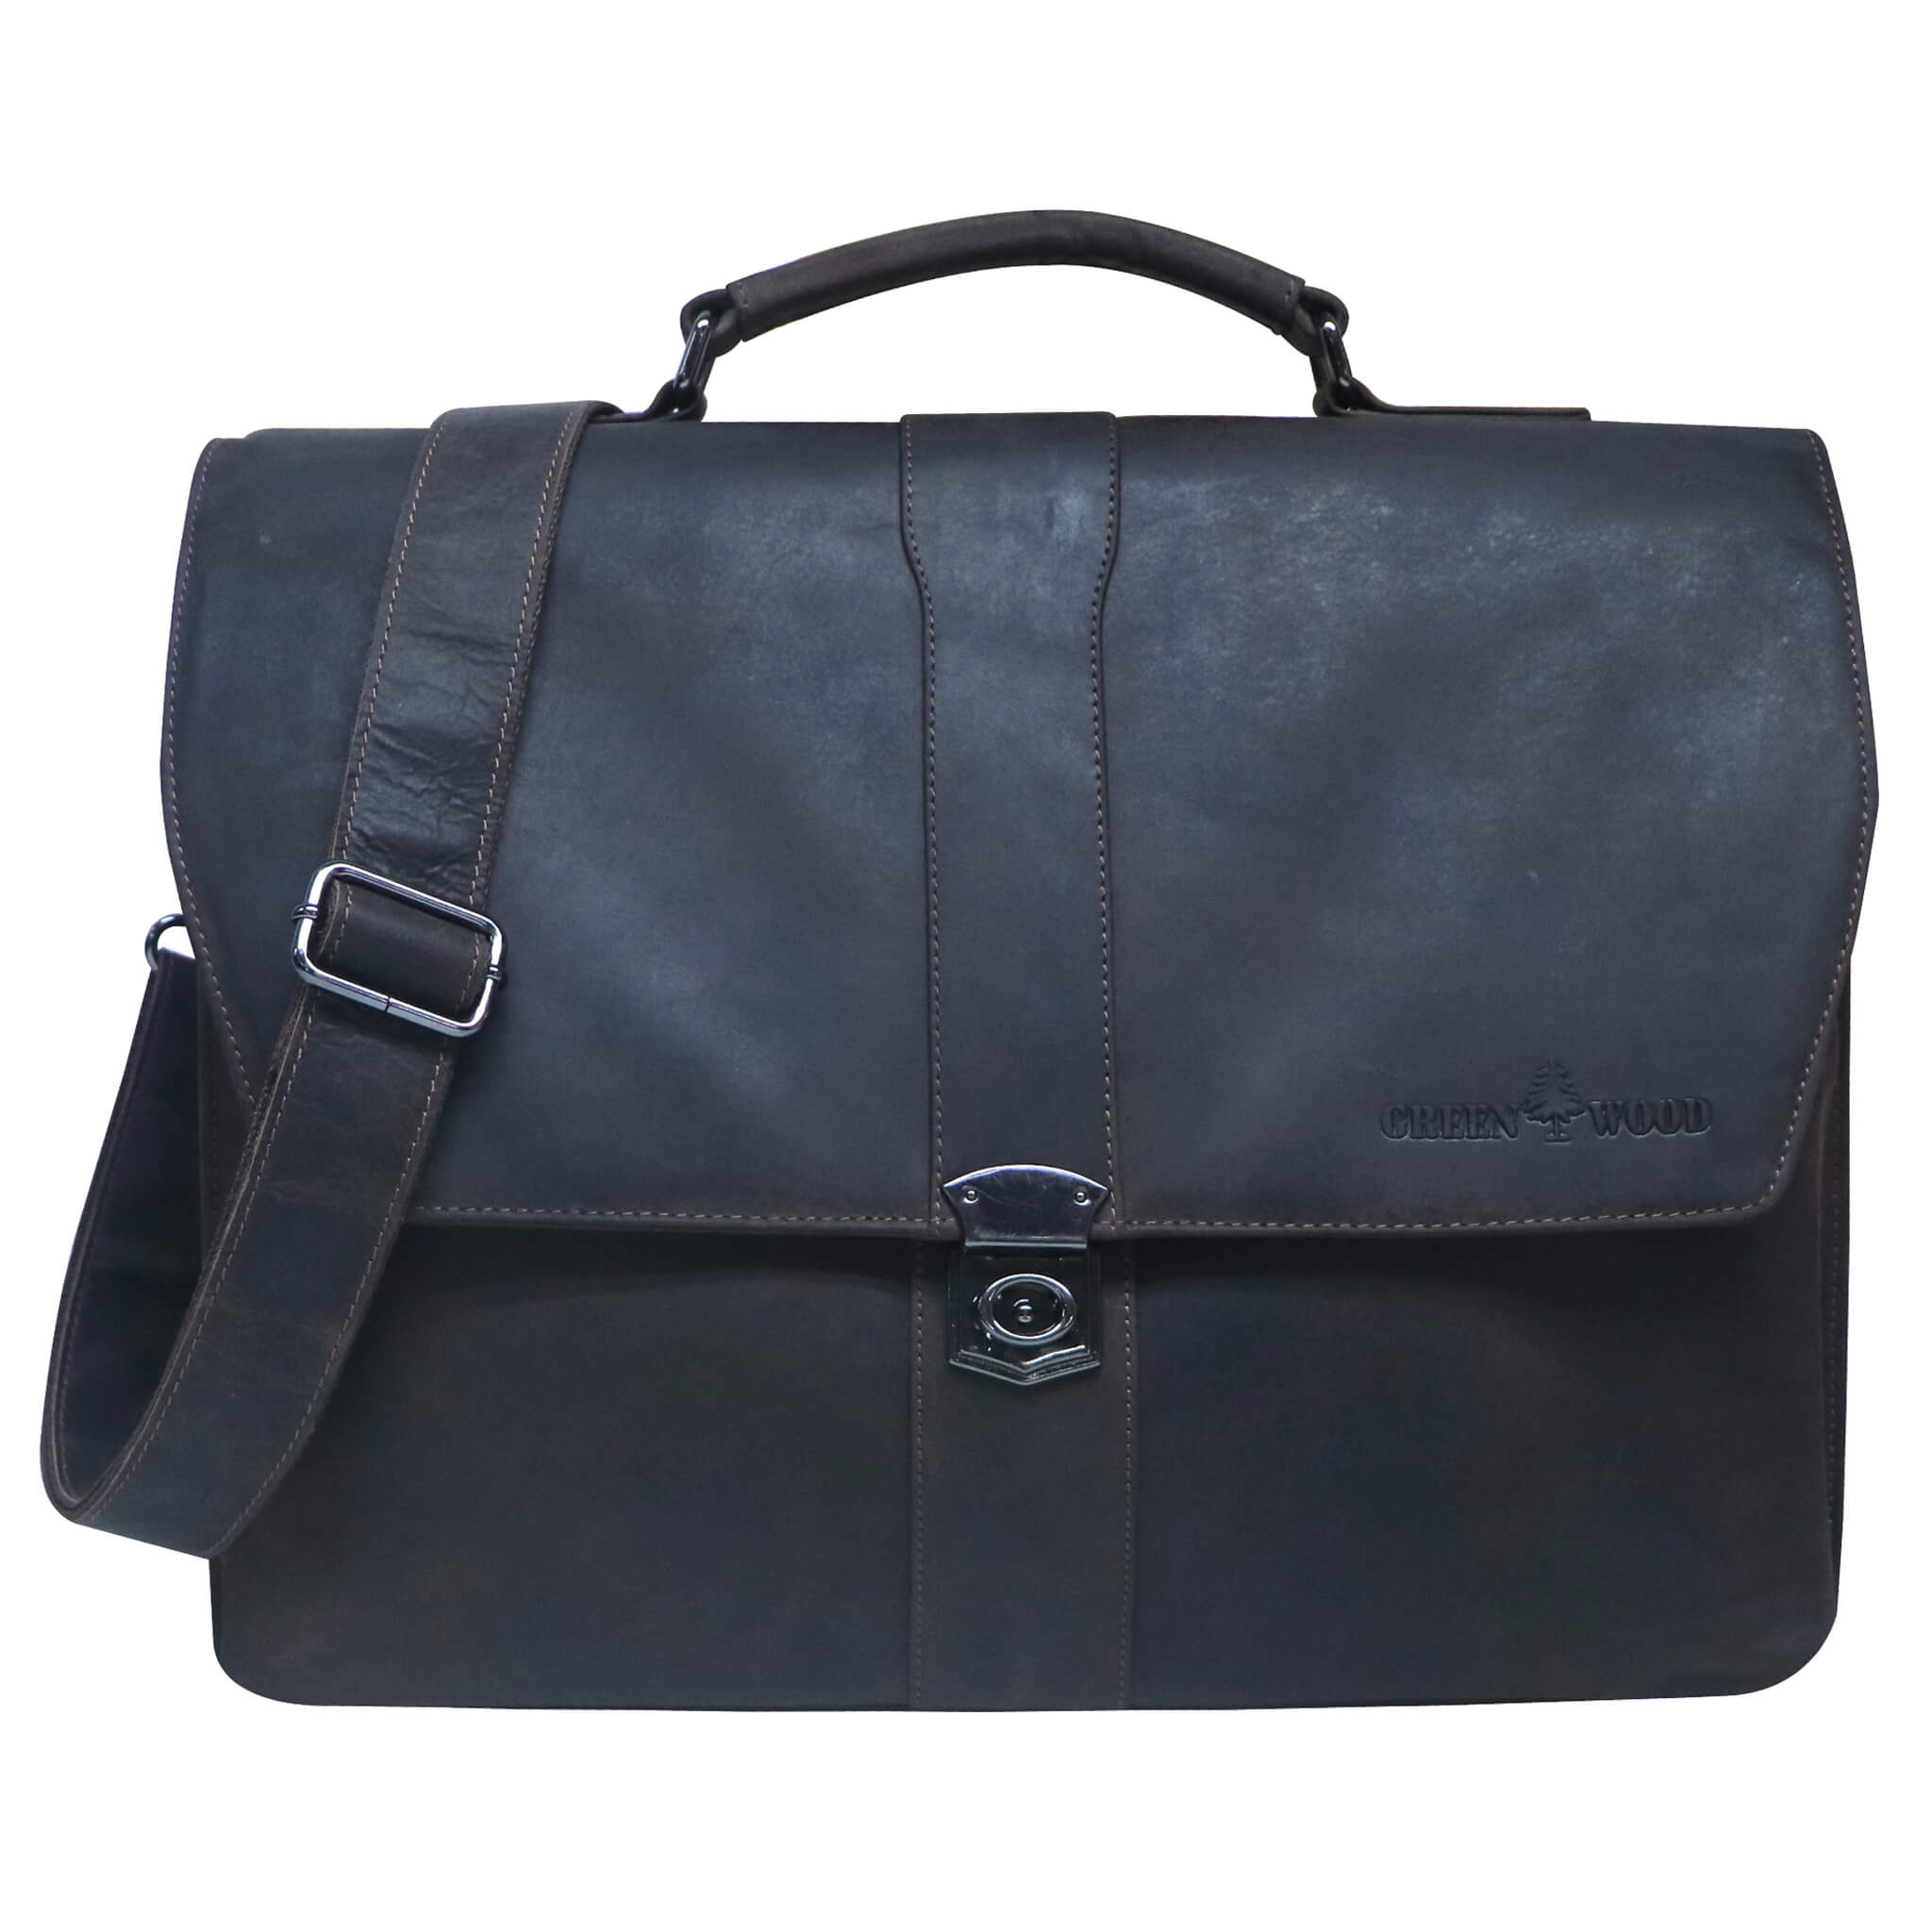 Hagen Leather Briefcase Men Classic Work Bag Women Large